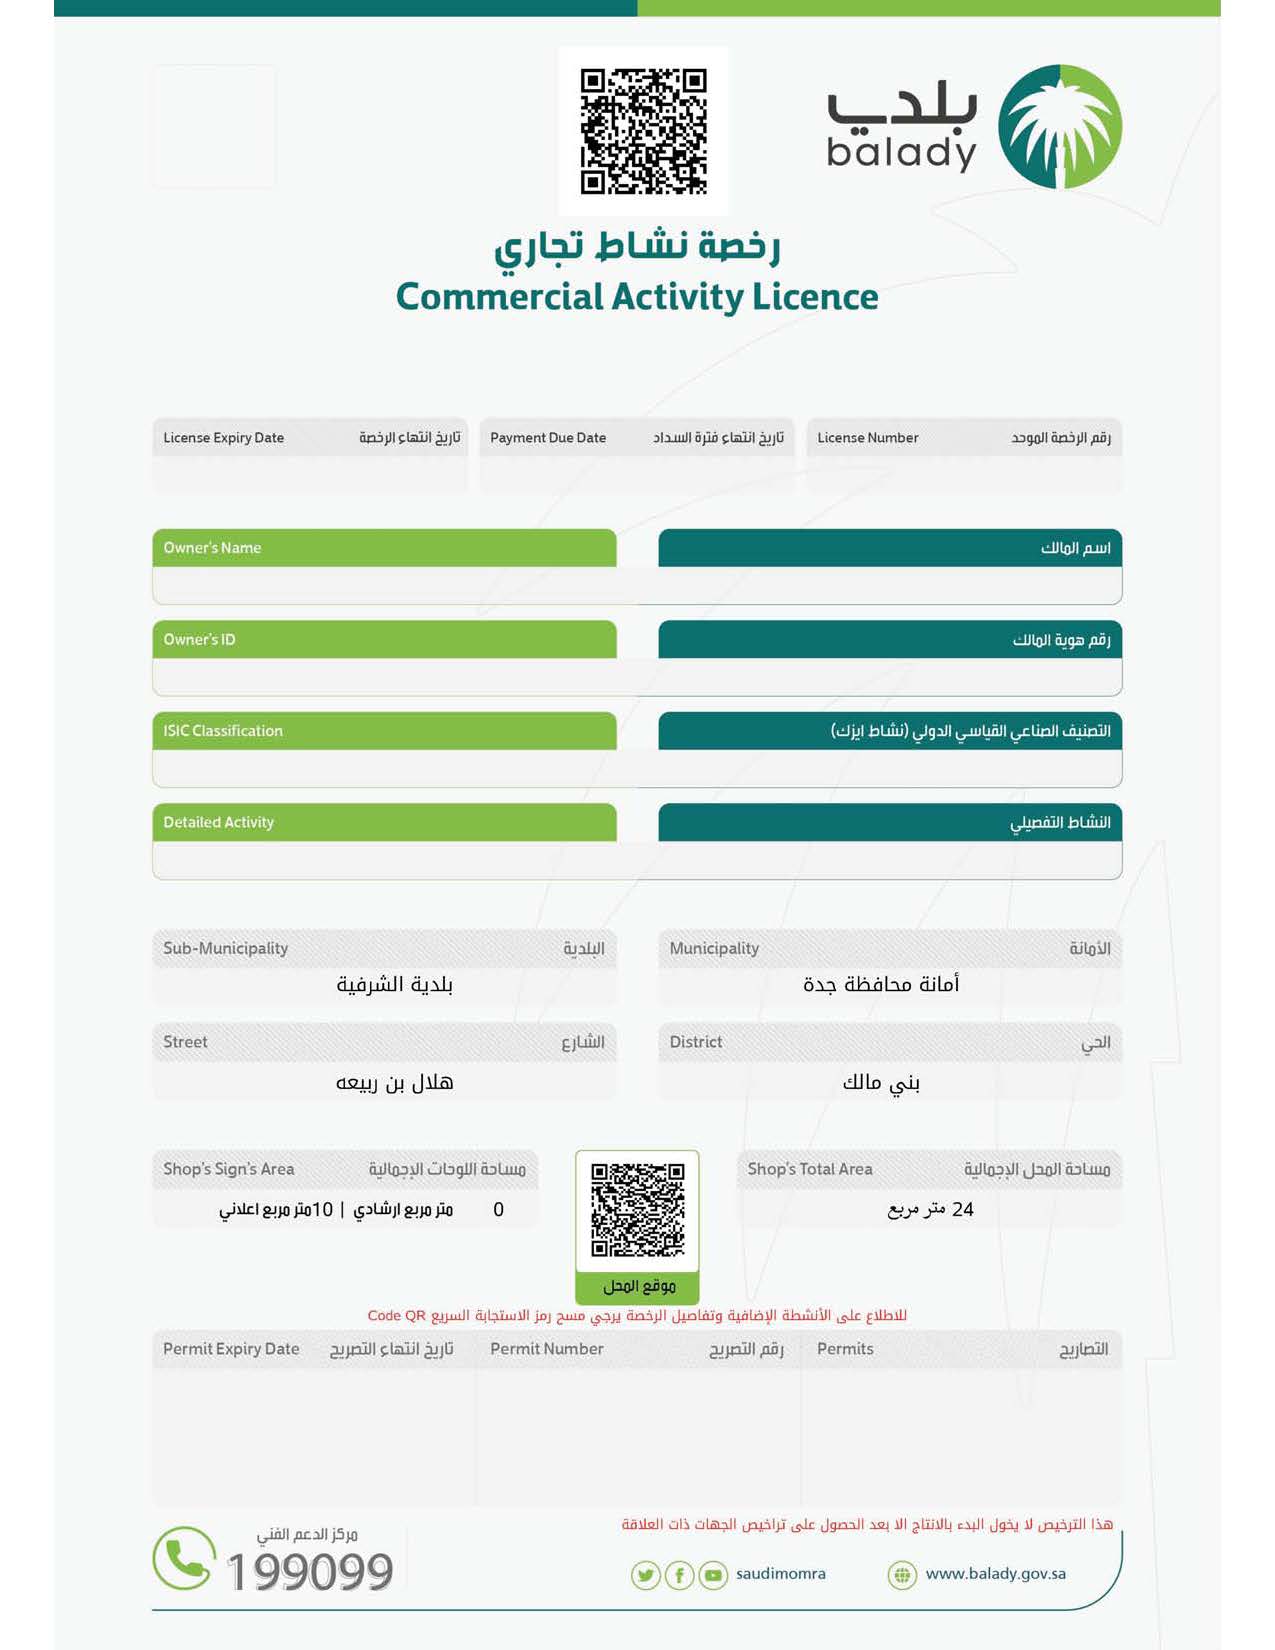 البلديات Page 09 One of the leading companies and a significant number in all its fields